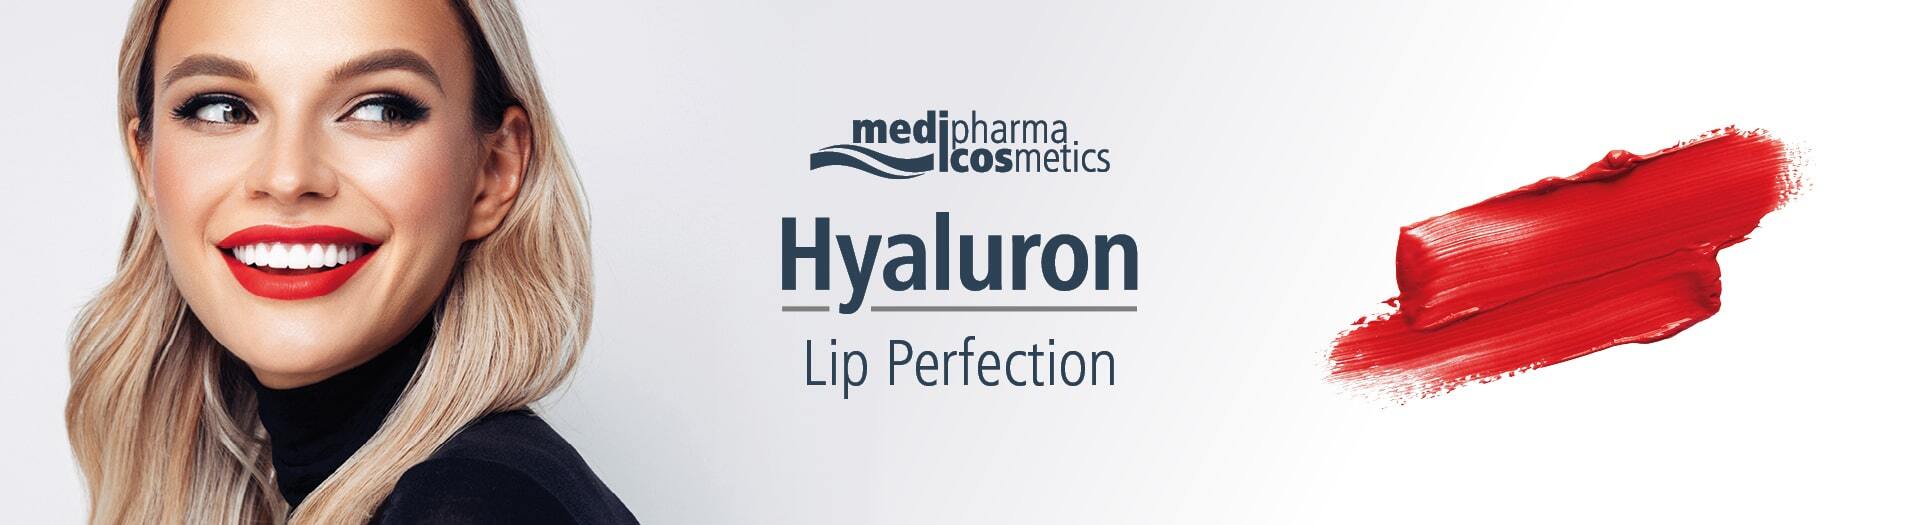 Lip Perfection von medipharma cosmetics